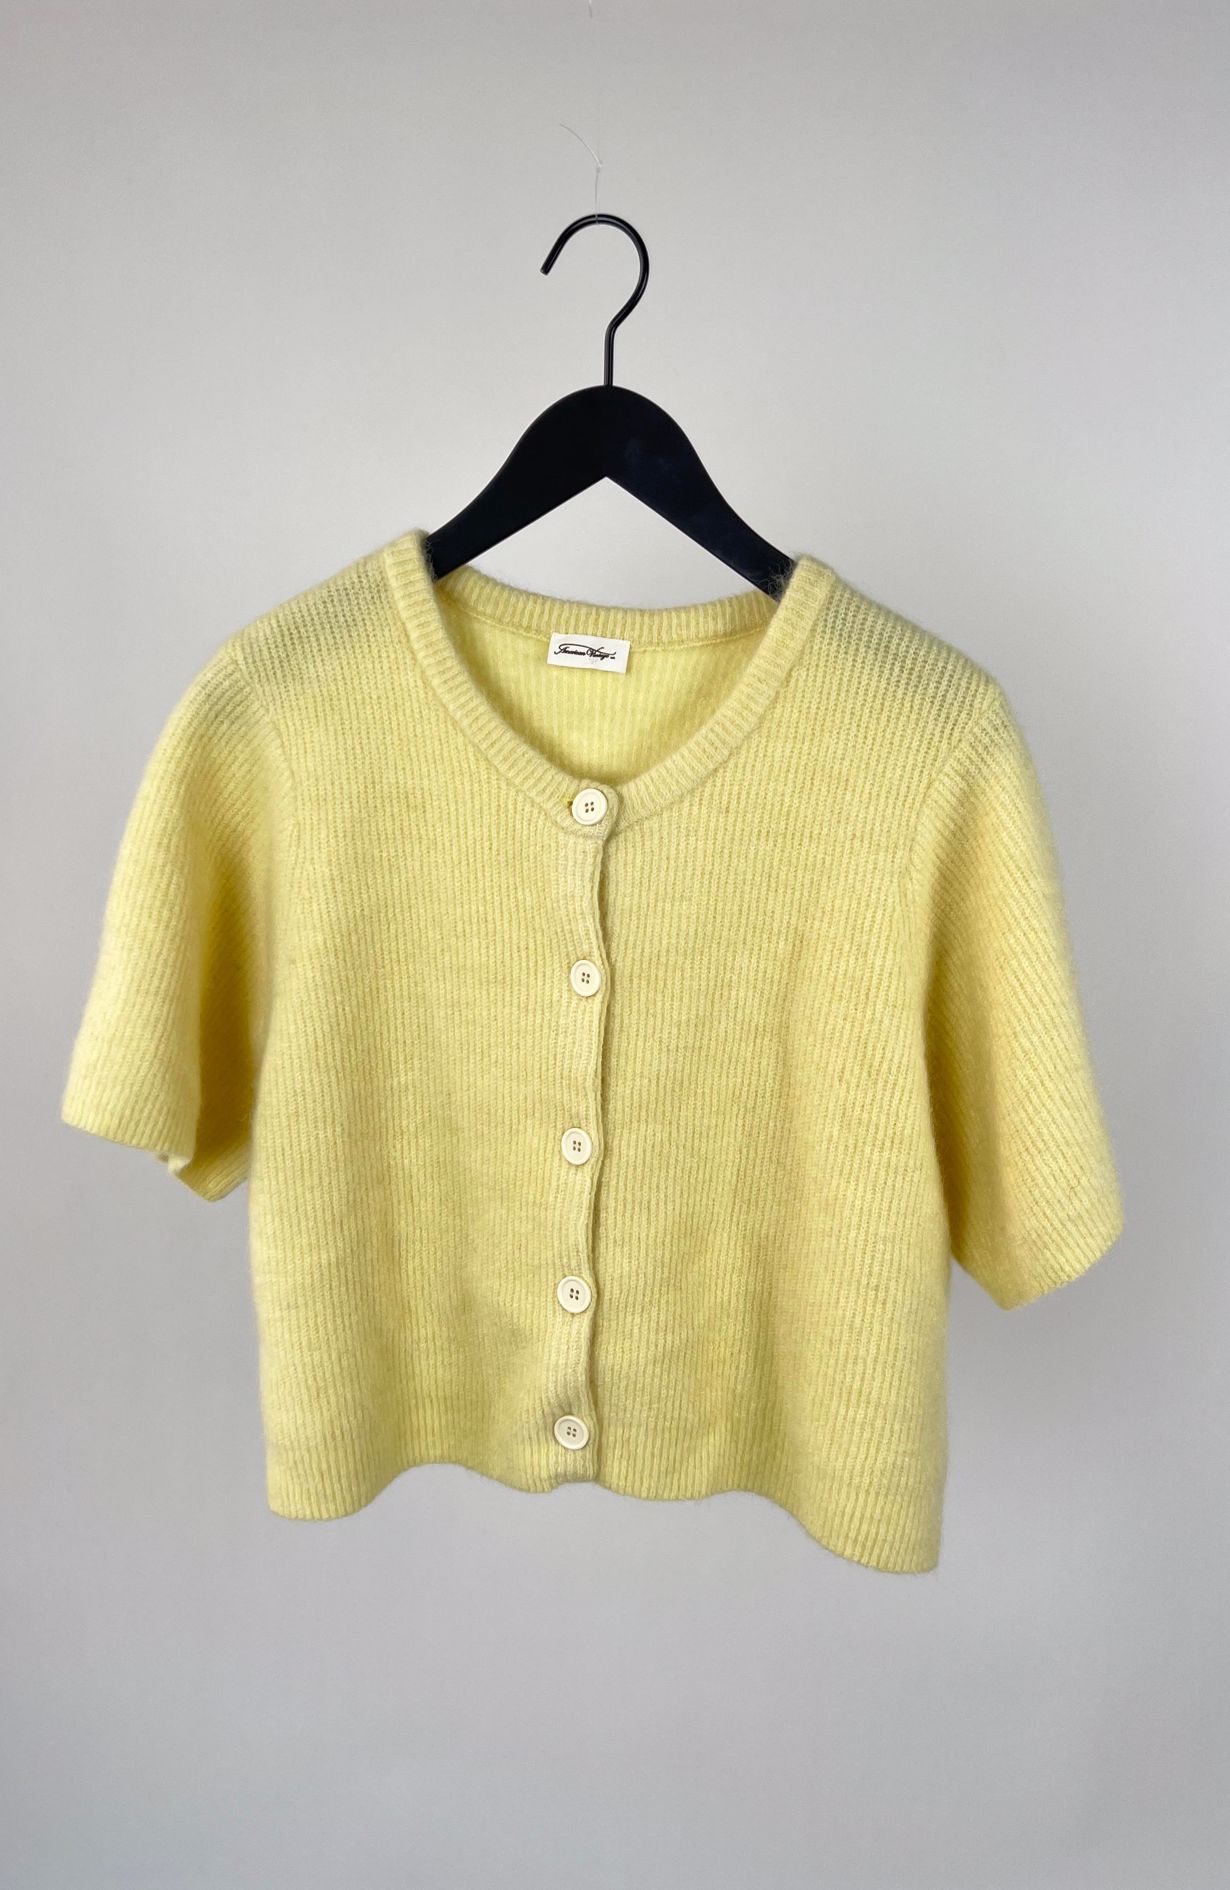 American Vintage cardigan yellow size XS/S